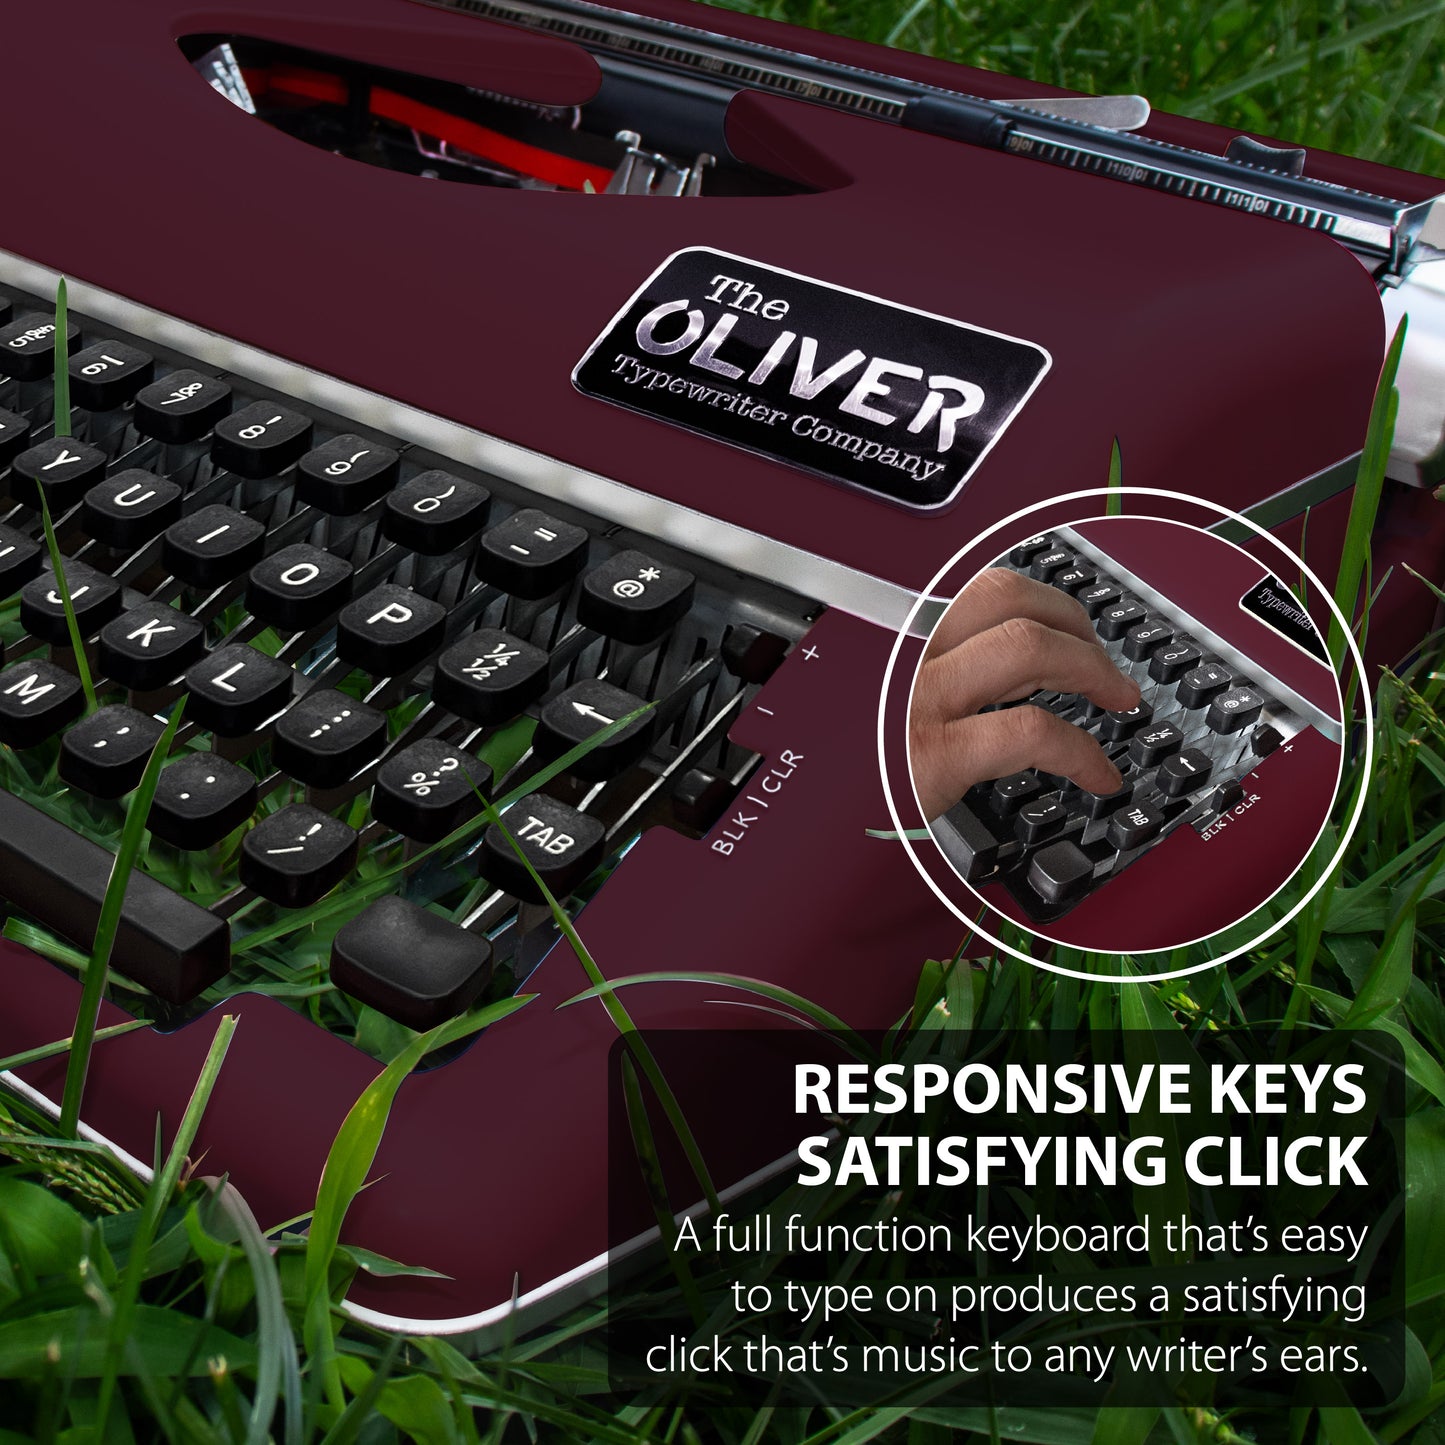 The Oliver Typewriter Company Legacy Manual Typewriter, Burgundy